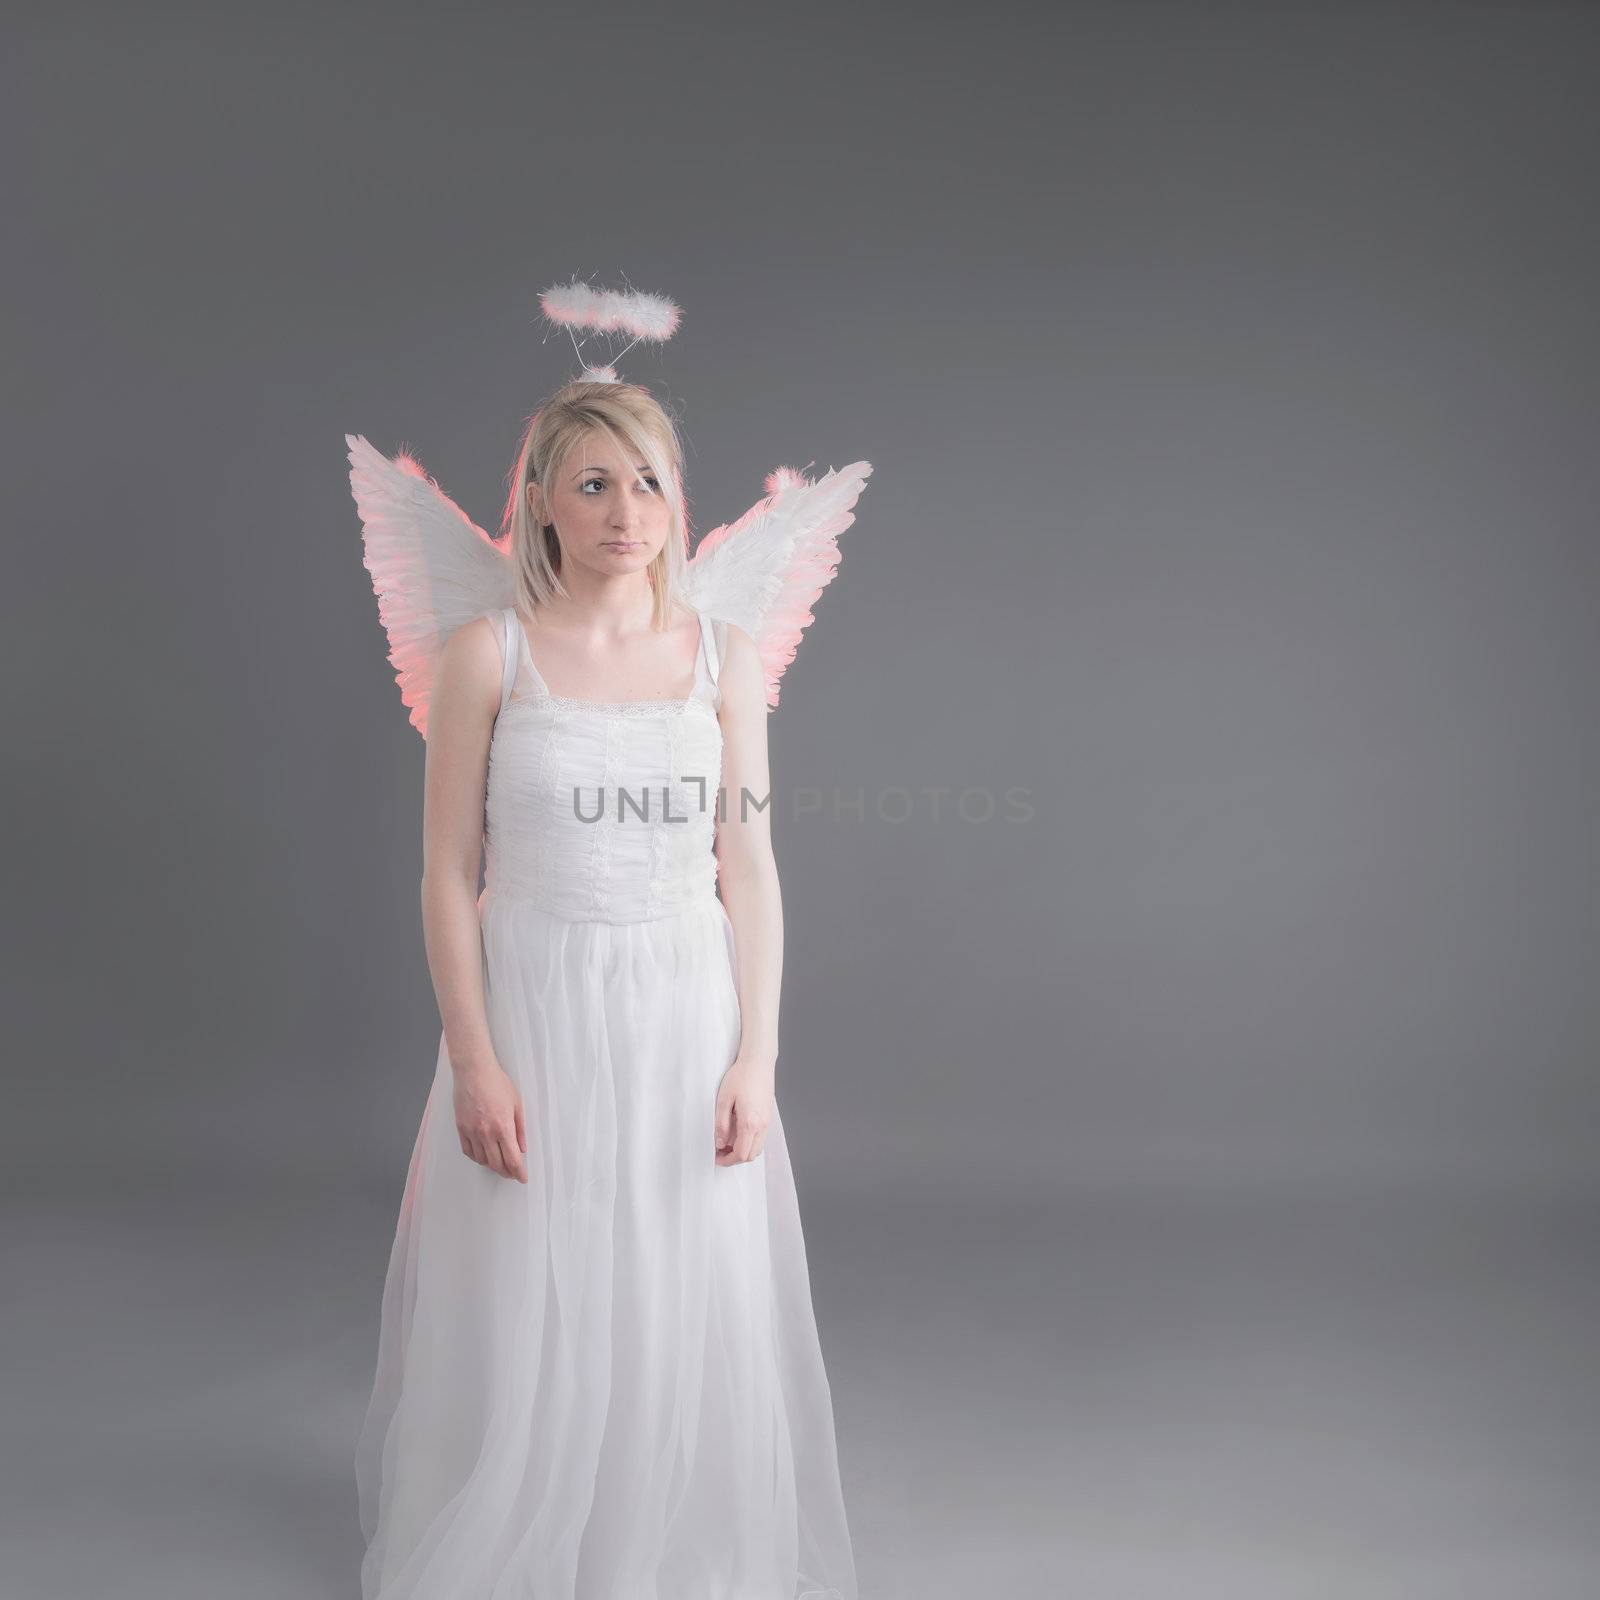 sad female angel by kokimk